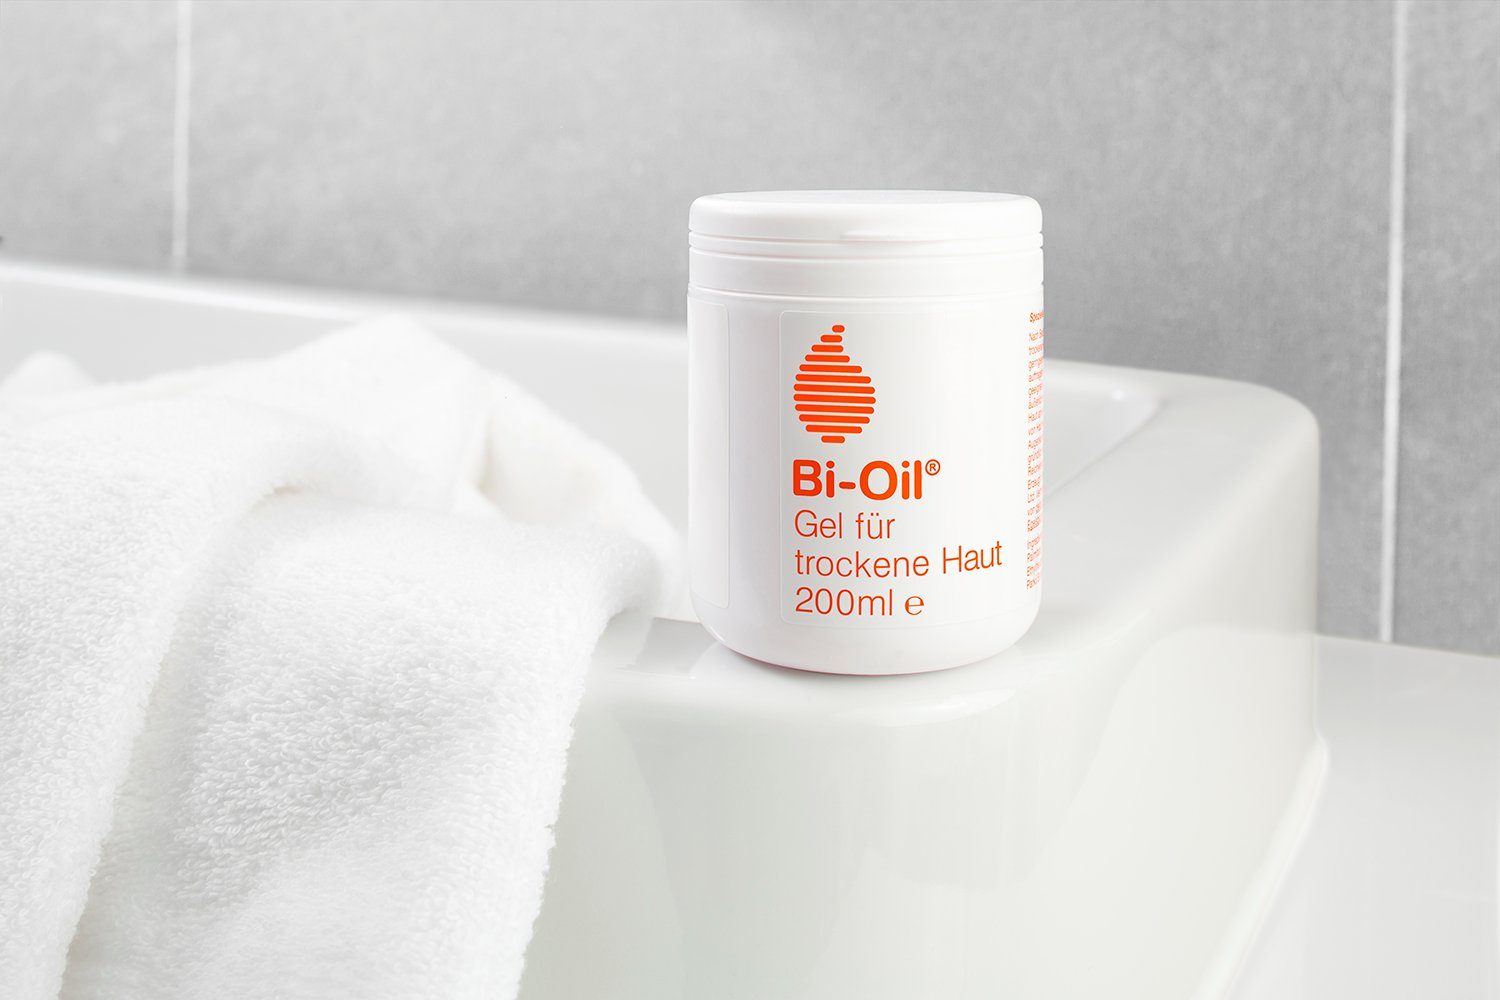 1-tlg. für 200 trockene Gel ml, BI-OIL Haut Hautpflegegel